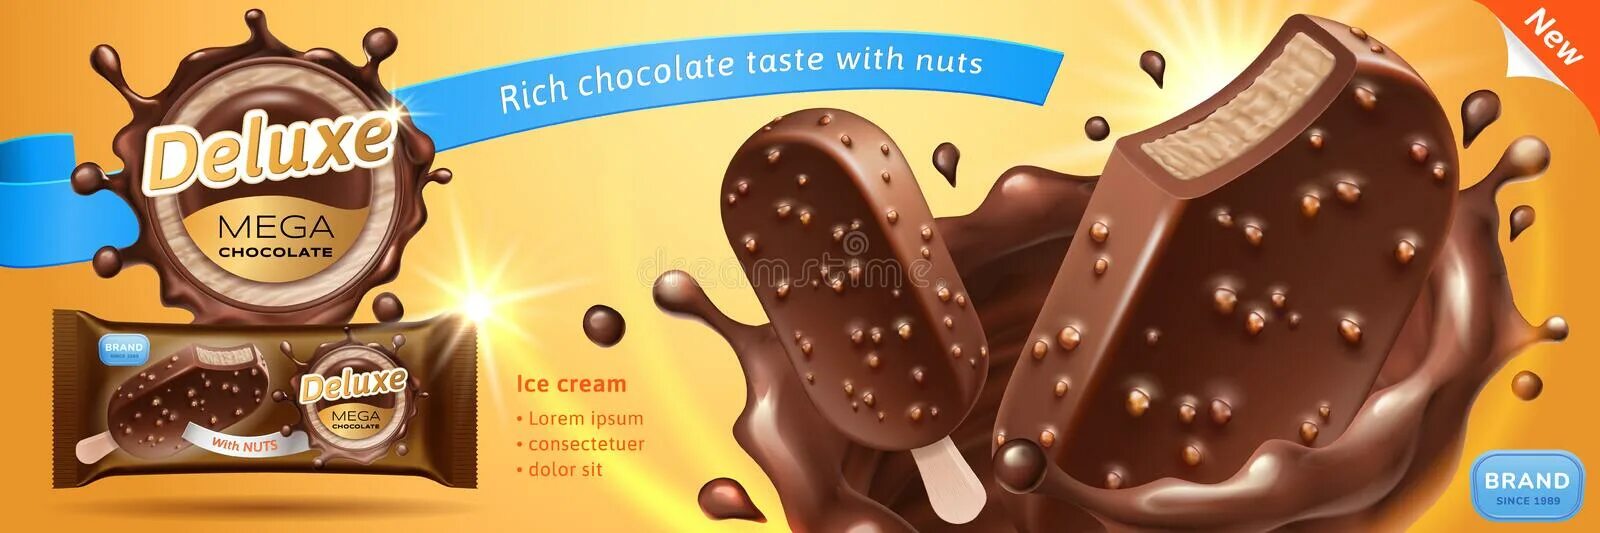 Шоколад Делюкс. Айс Ле Люкс шоколадное. Шоколадка Deluxe. Айс Делюкс шоколадный. Айс де люкс шоколадный